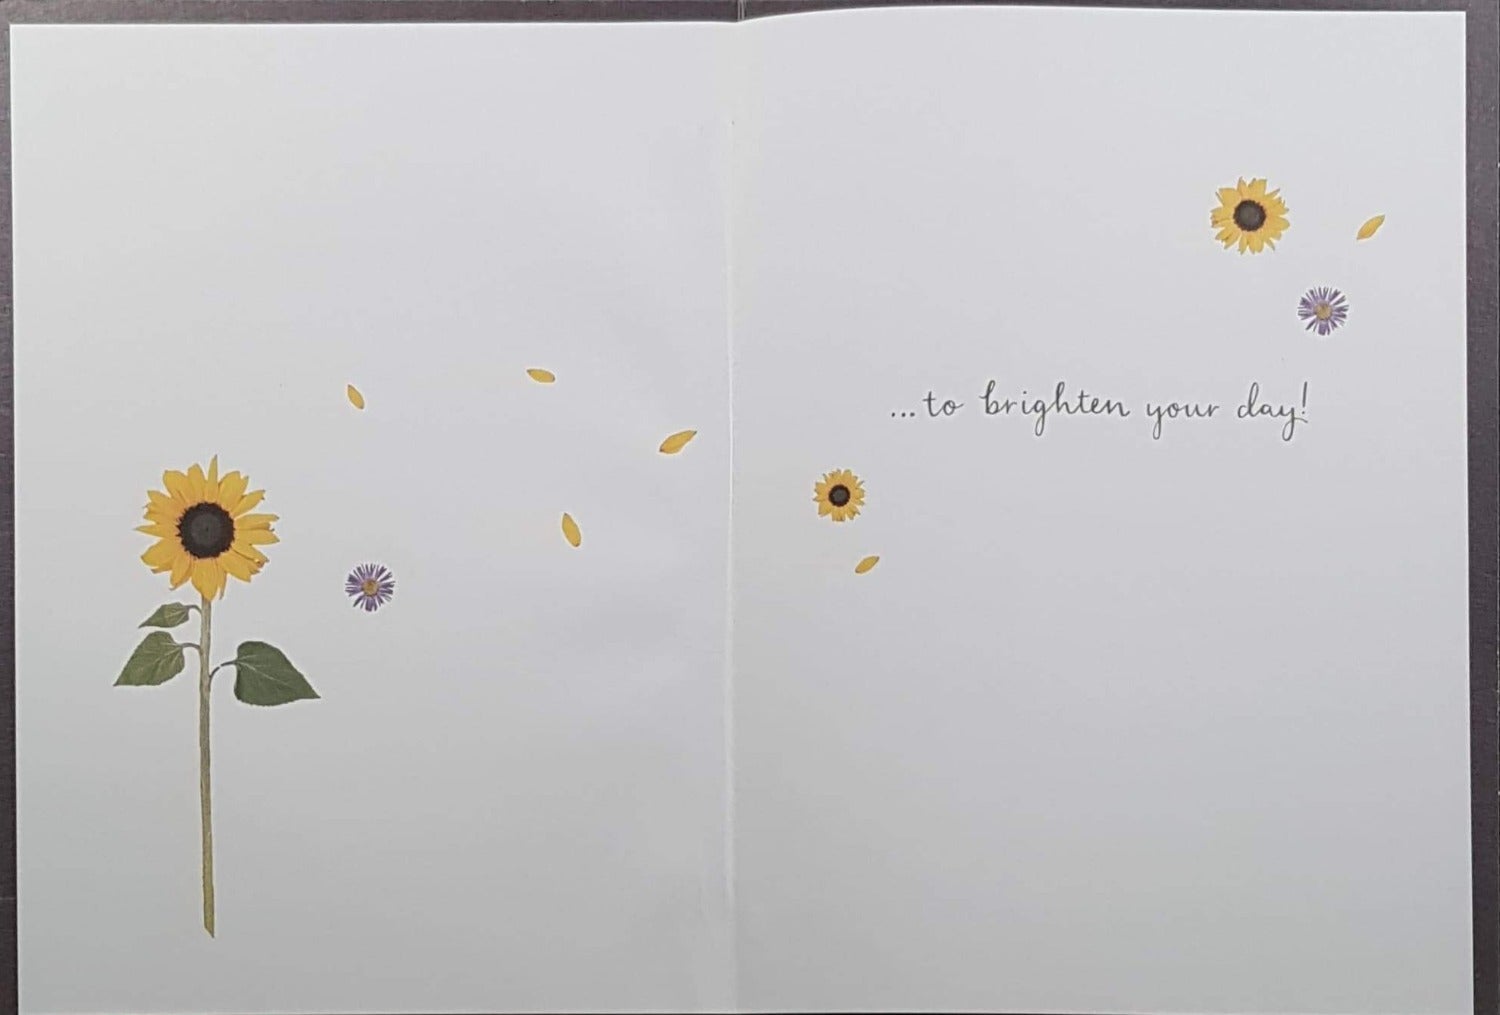 Thinking Of You Card - Single Sunflower & Sending You A Sunshine